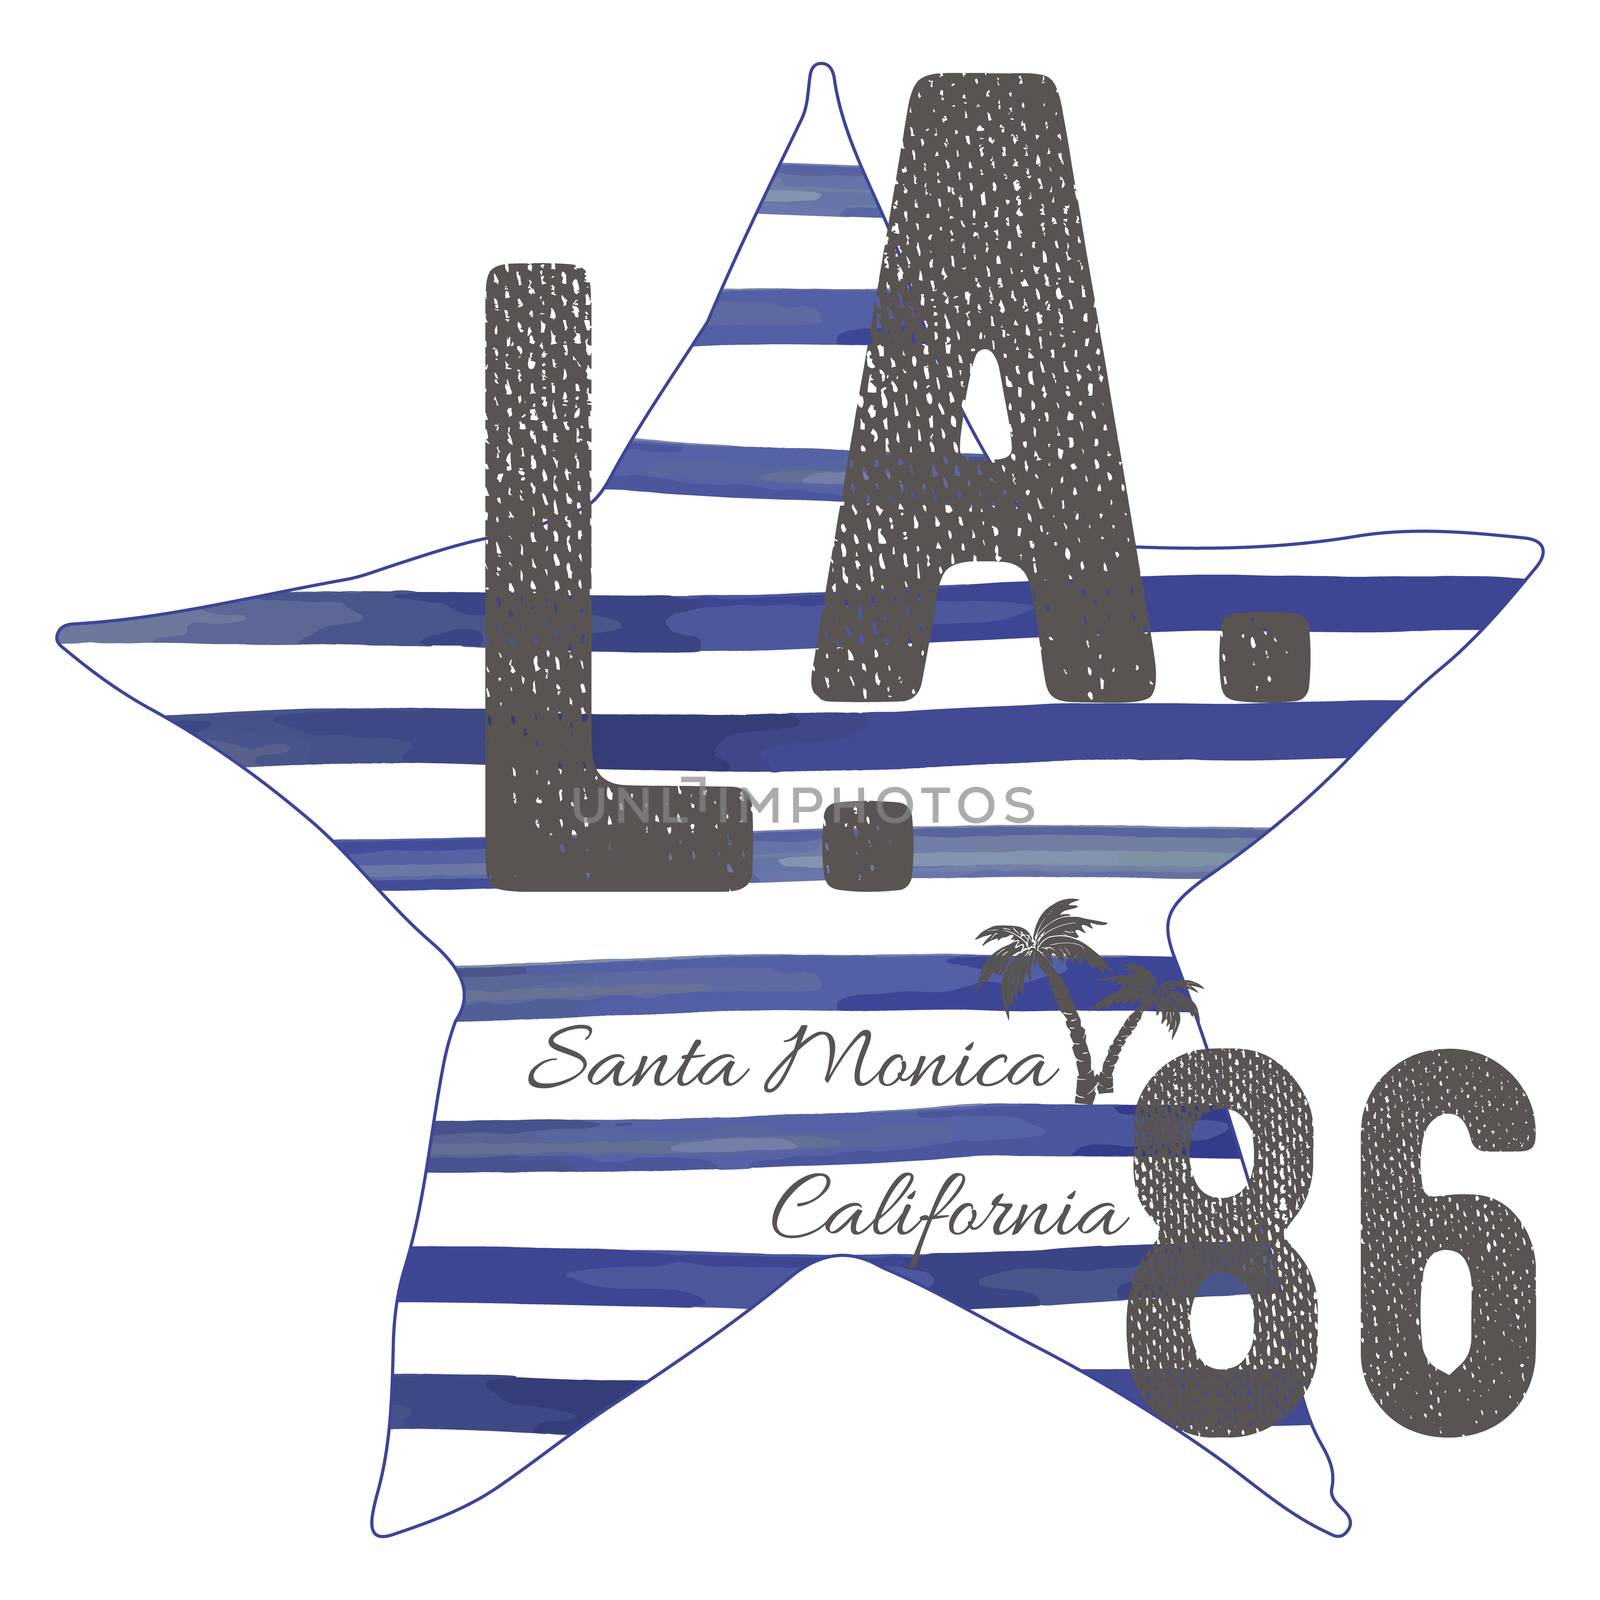 T-shirt typography design, LA california santa monica beach  printing graphics, typographic  vector illustration, Los Angeles graphic design for label or t-shirt print, Badge, Applique.